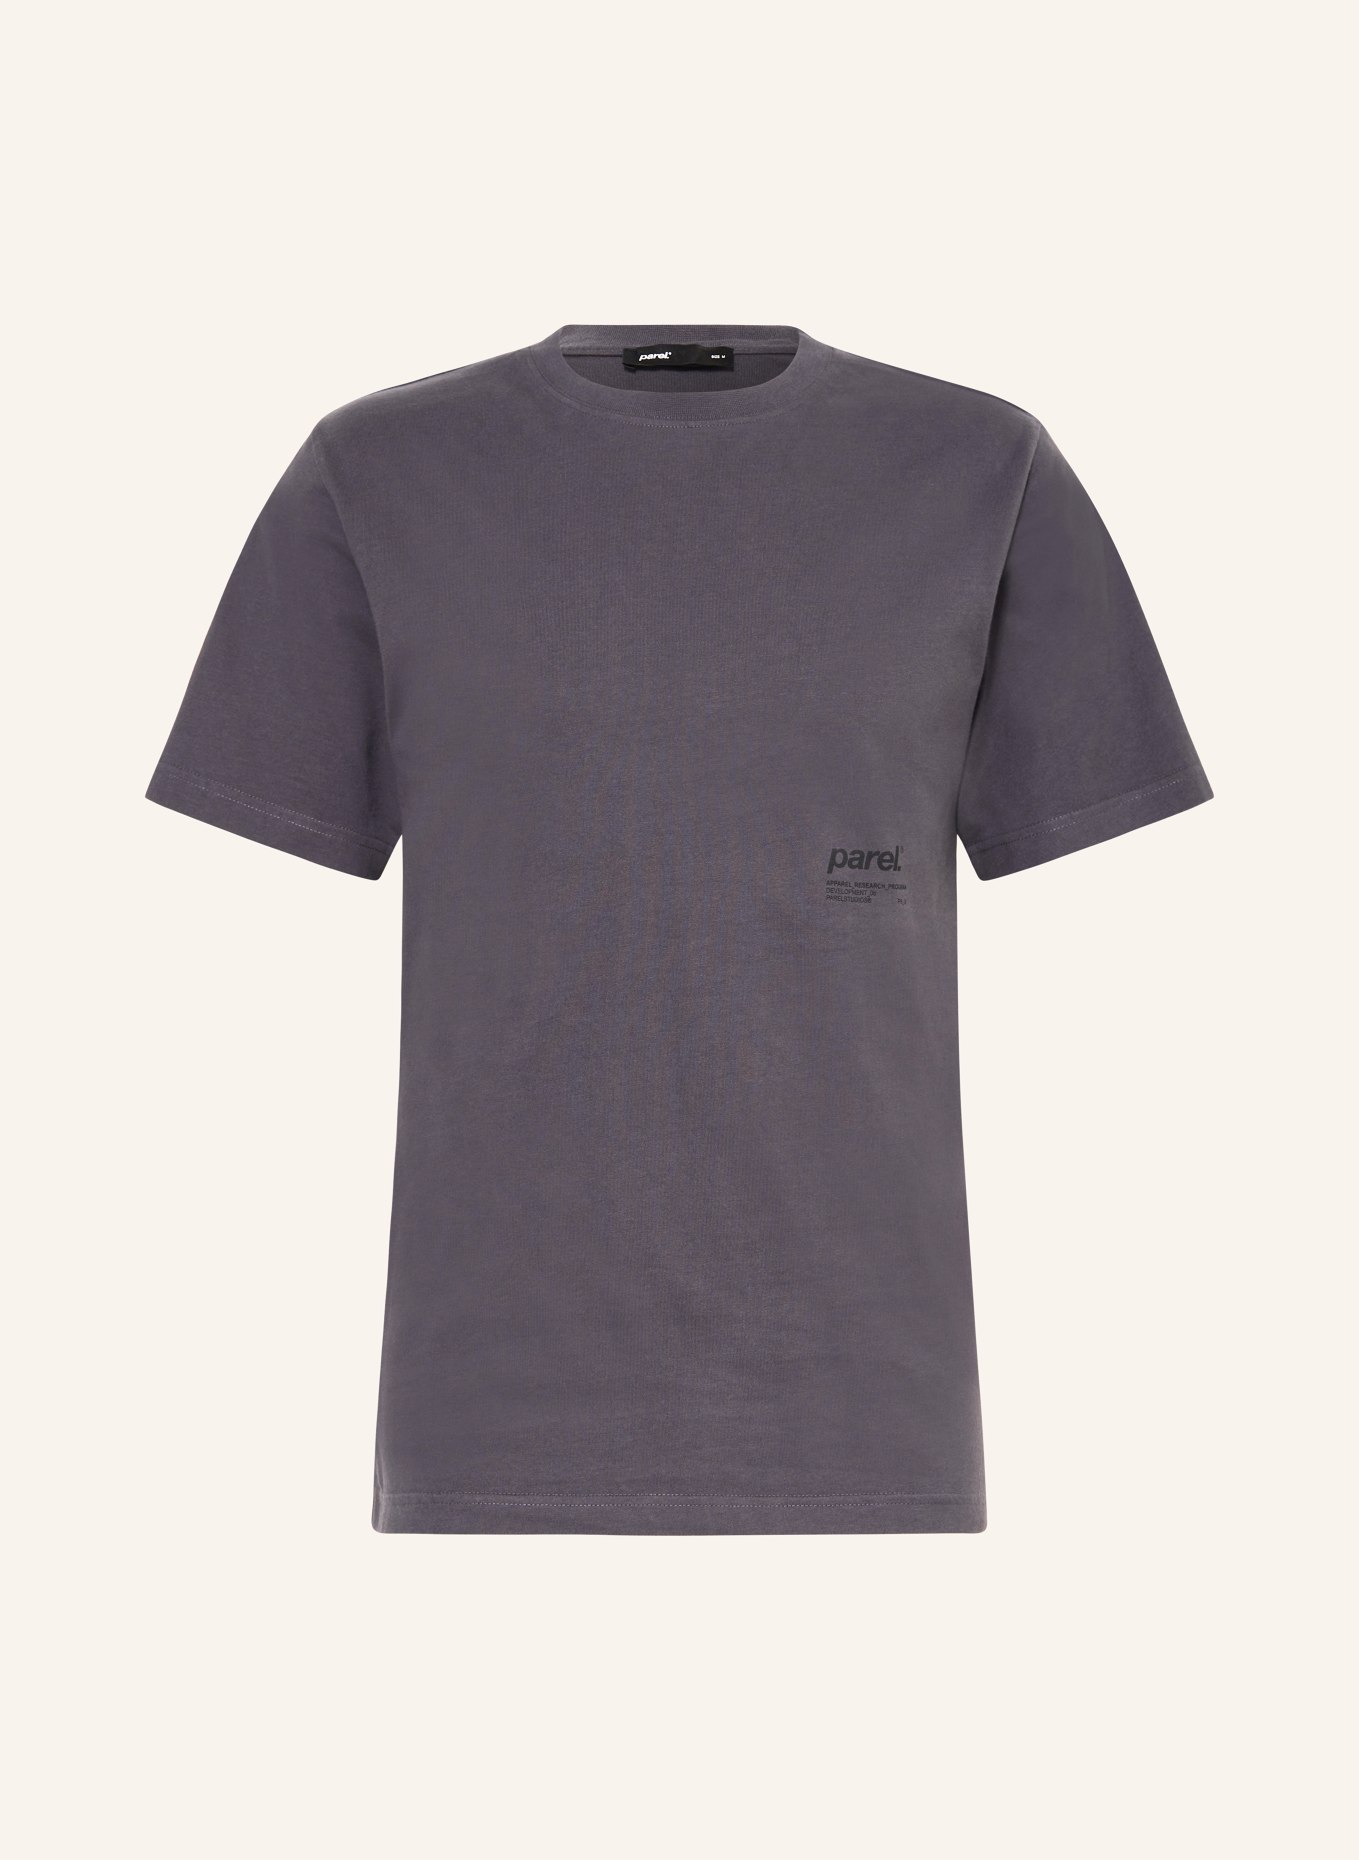 parel. T-Shirt, Farbe: GRAU (Bild 1)